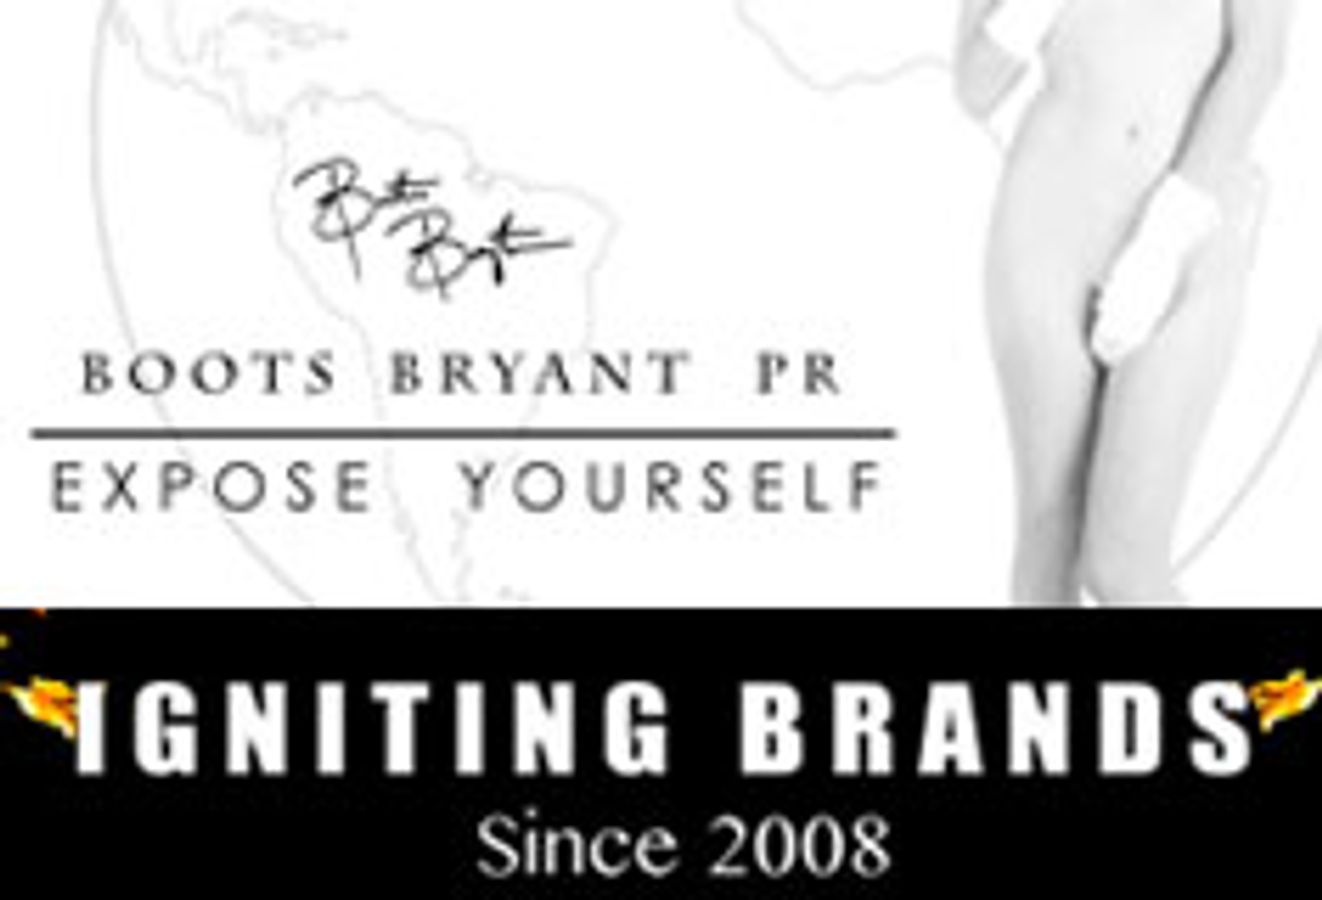 Boots Bryant PR